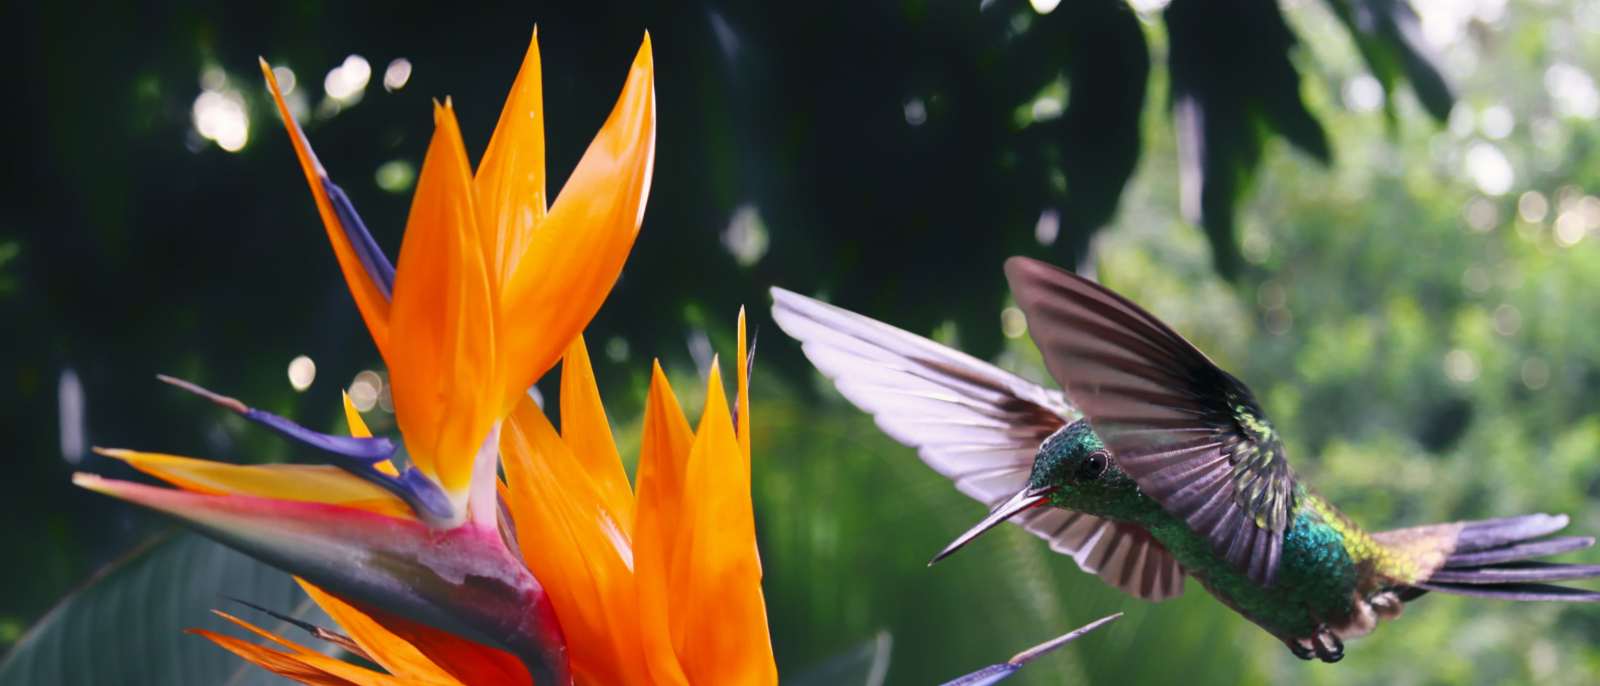 Flying Hummingbird at a Strelitzia flower